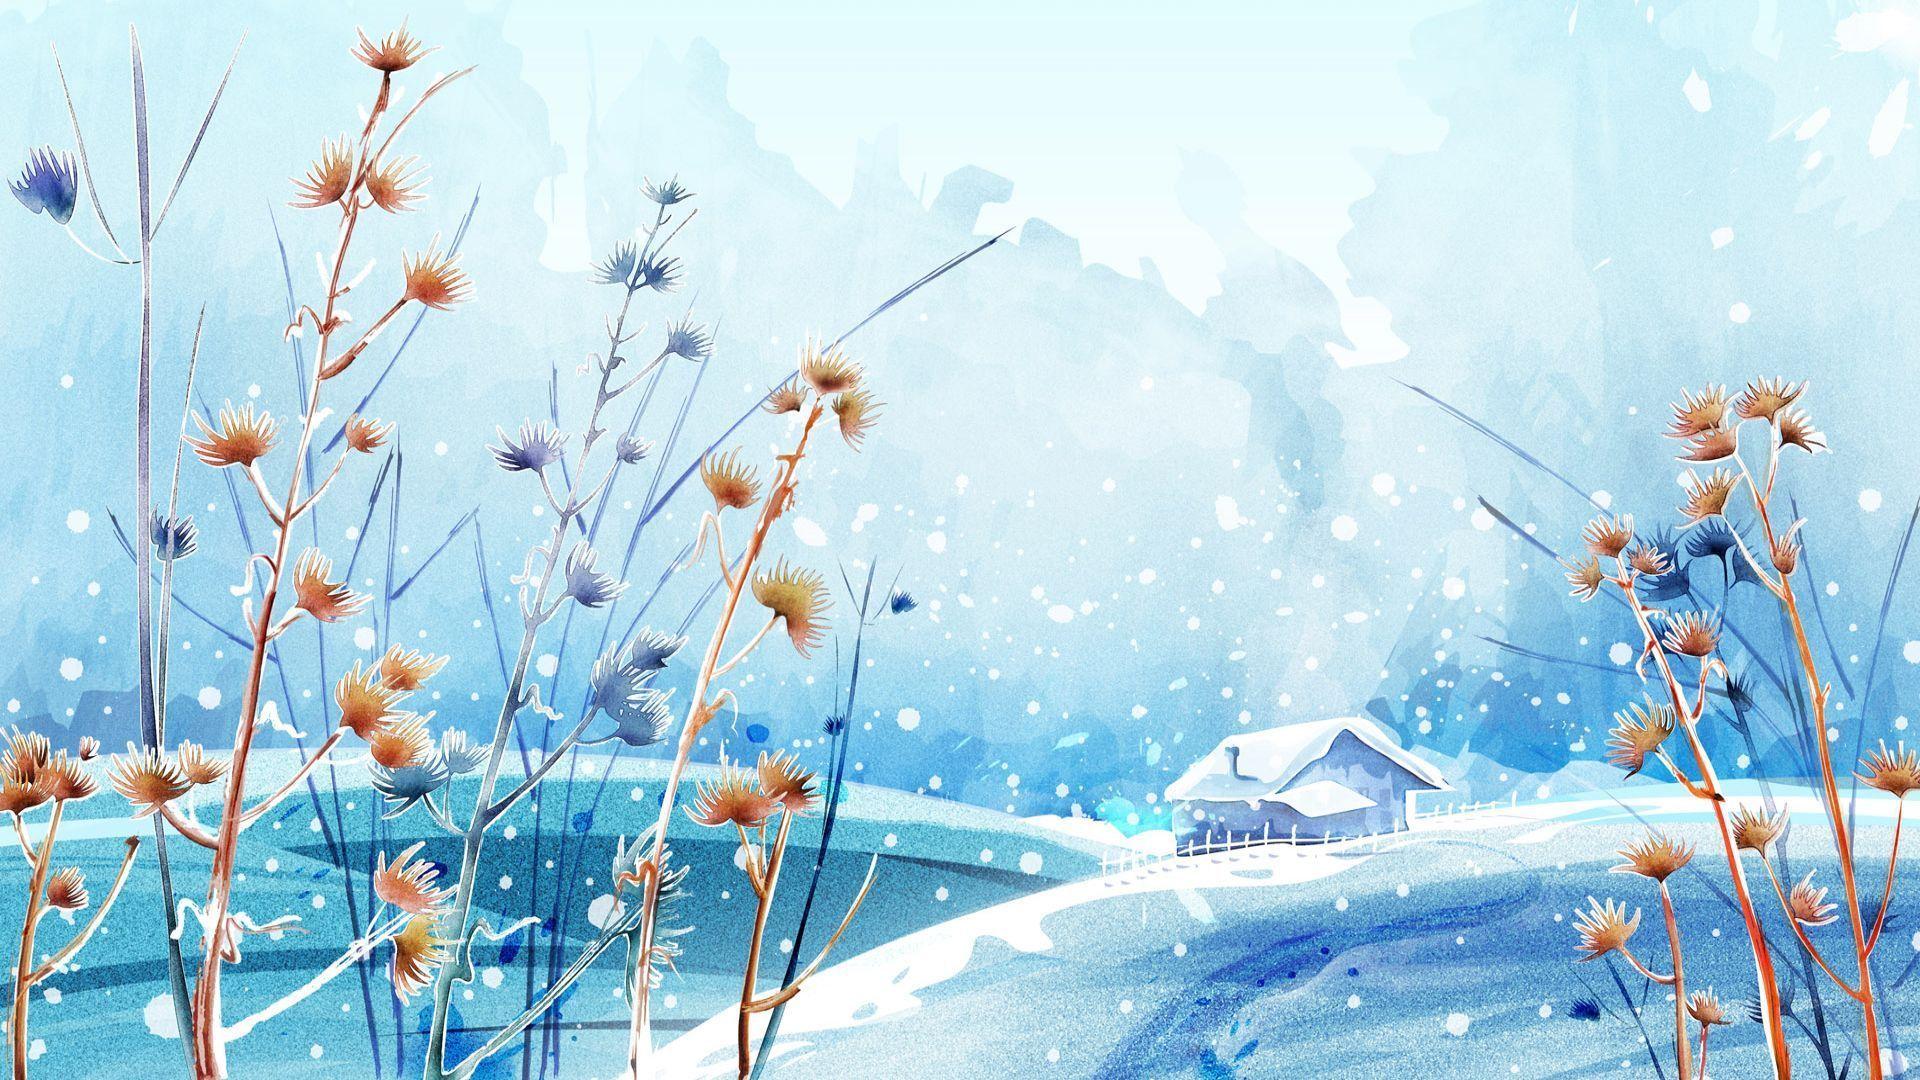 Anime Winter Scenery Wallpaper Wallpaper Background of Your Choice. Winter wallpaper, Scenery wallpaper, Winter desktop background